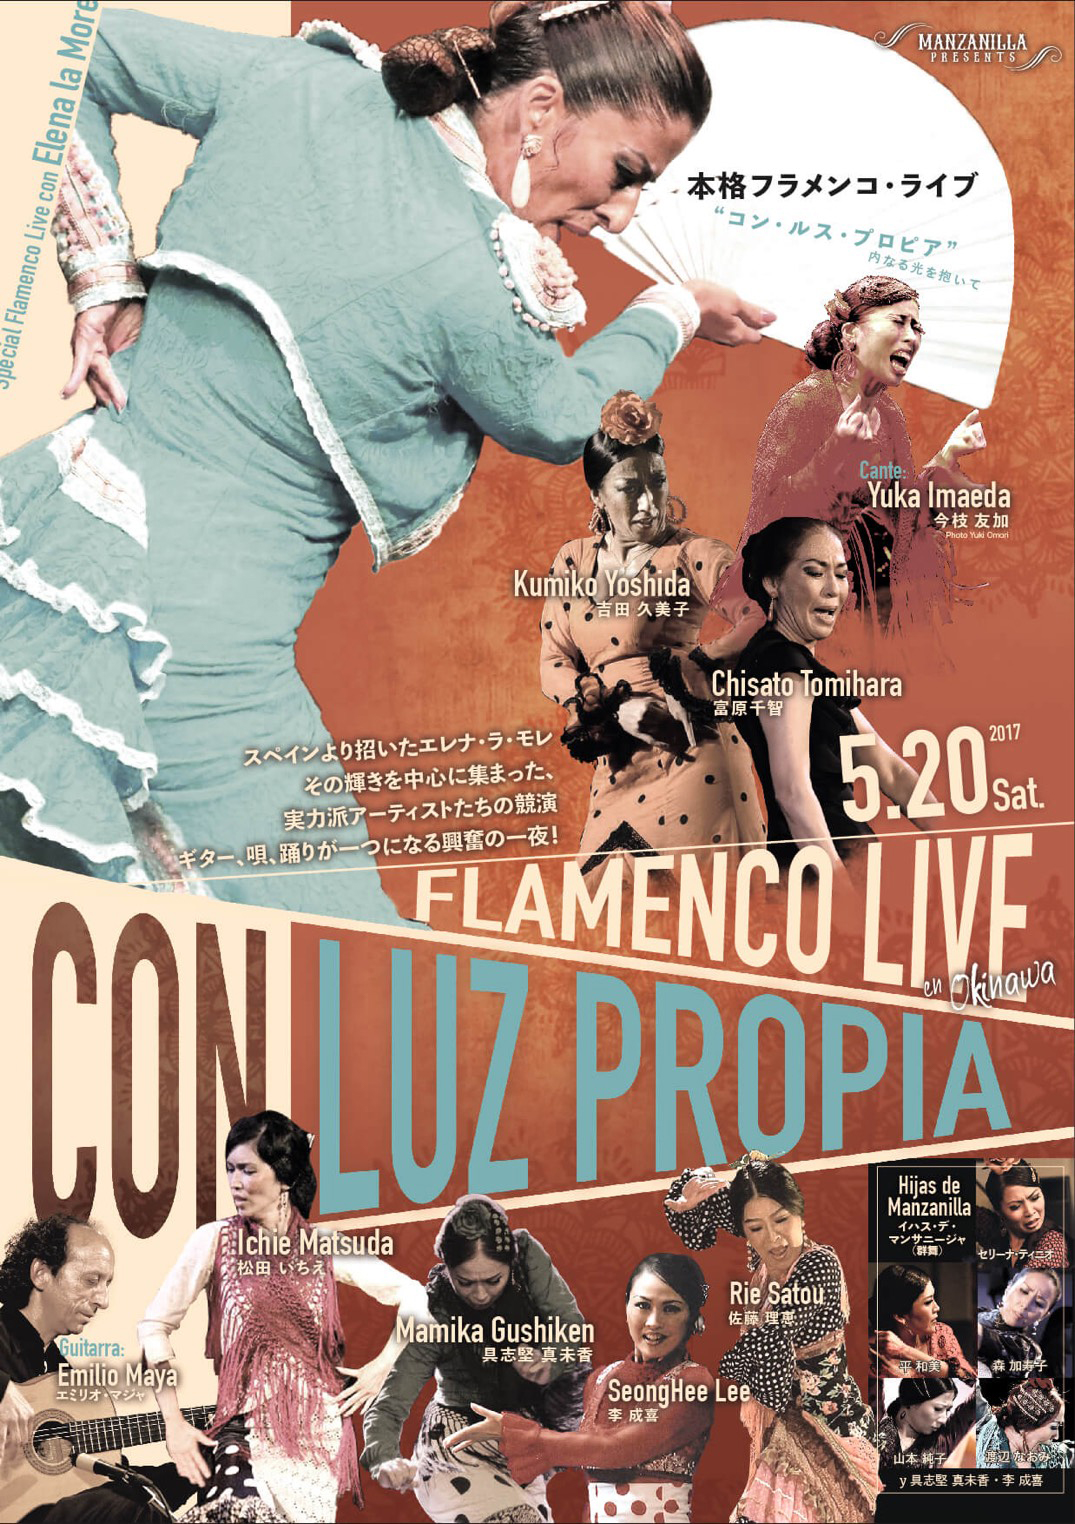 Flamenco Live con Luz Propia en Okinawa